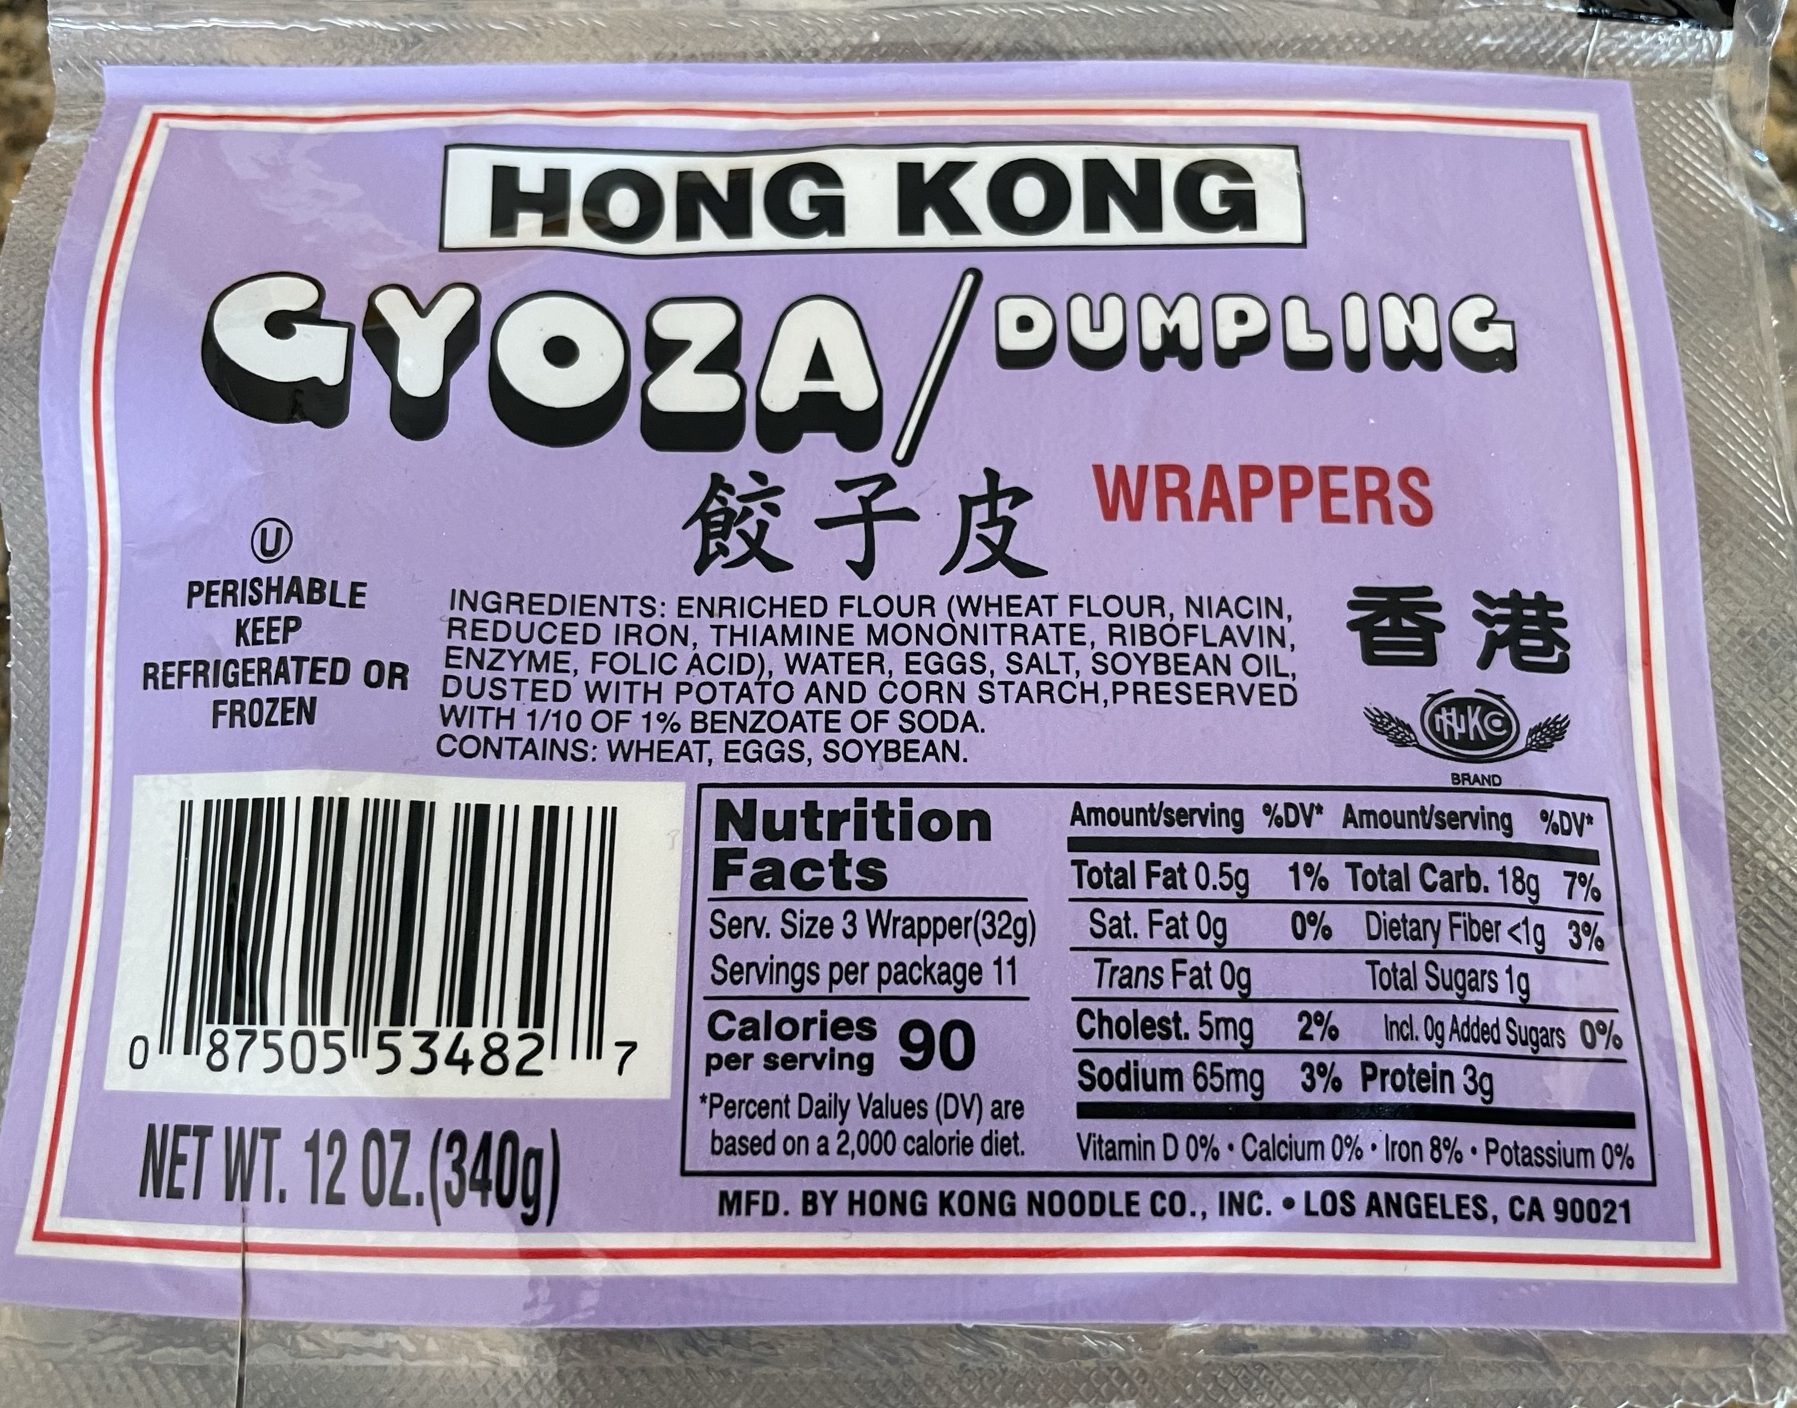 Gyoza wrappers